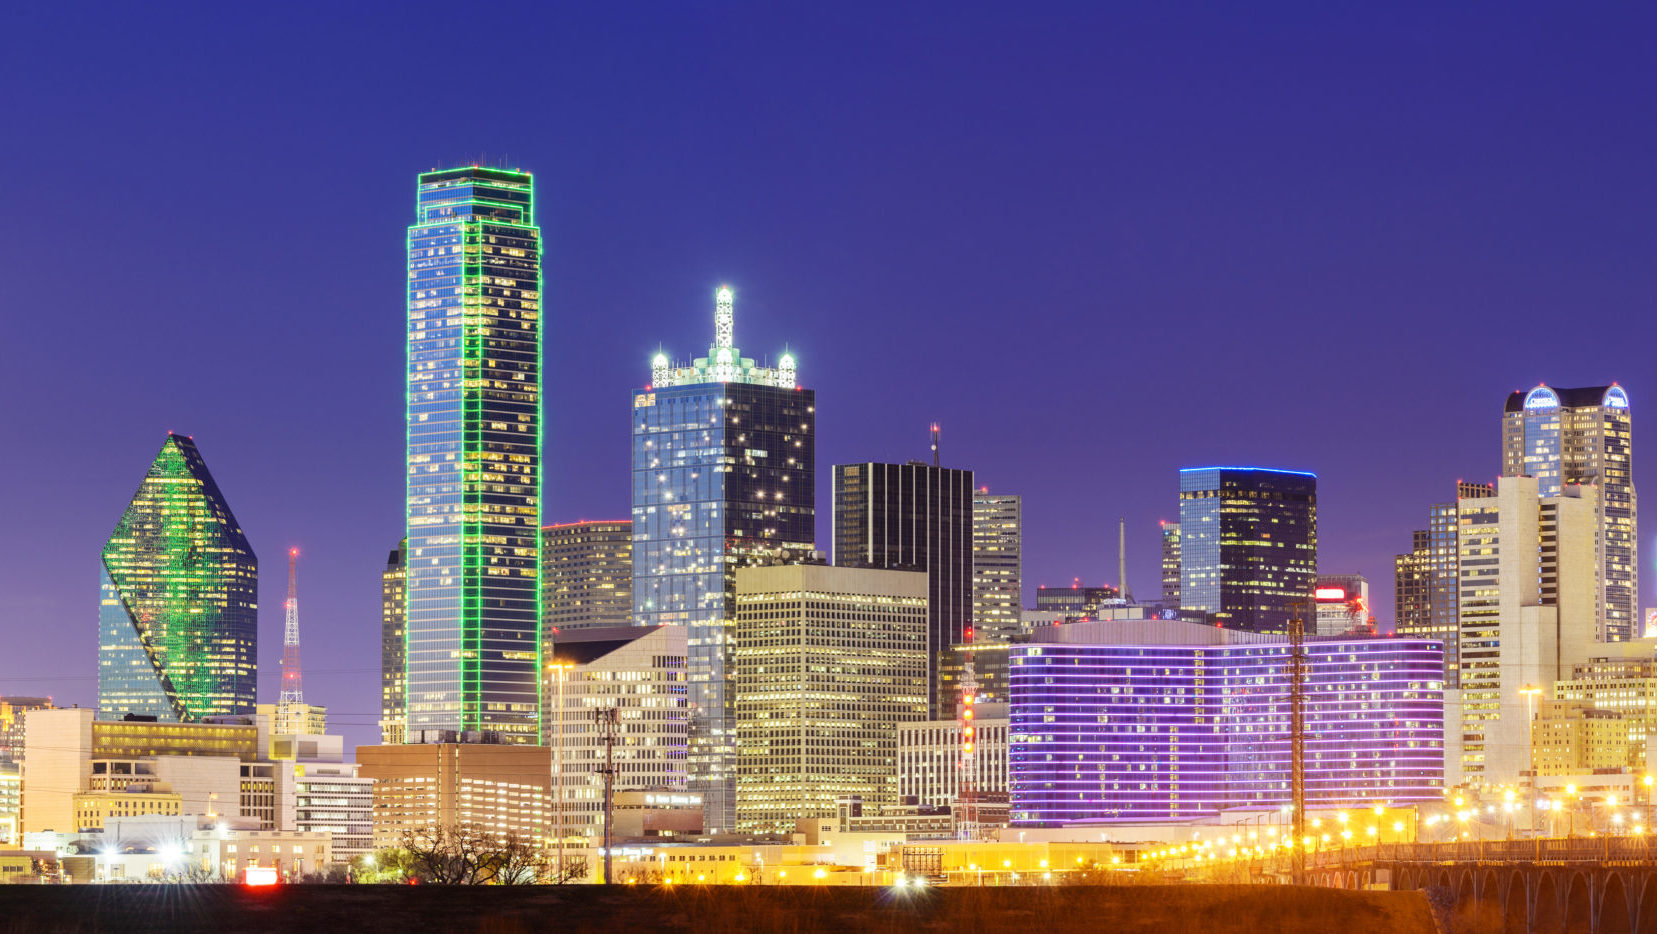 Dallas-Fort Worth: The Start of Something Bigger